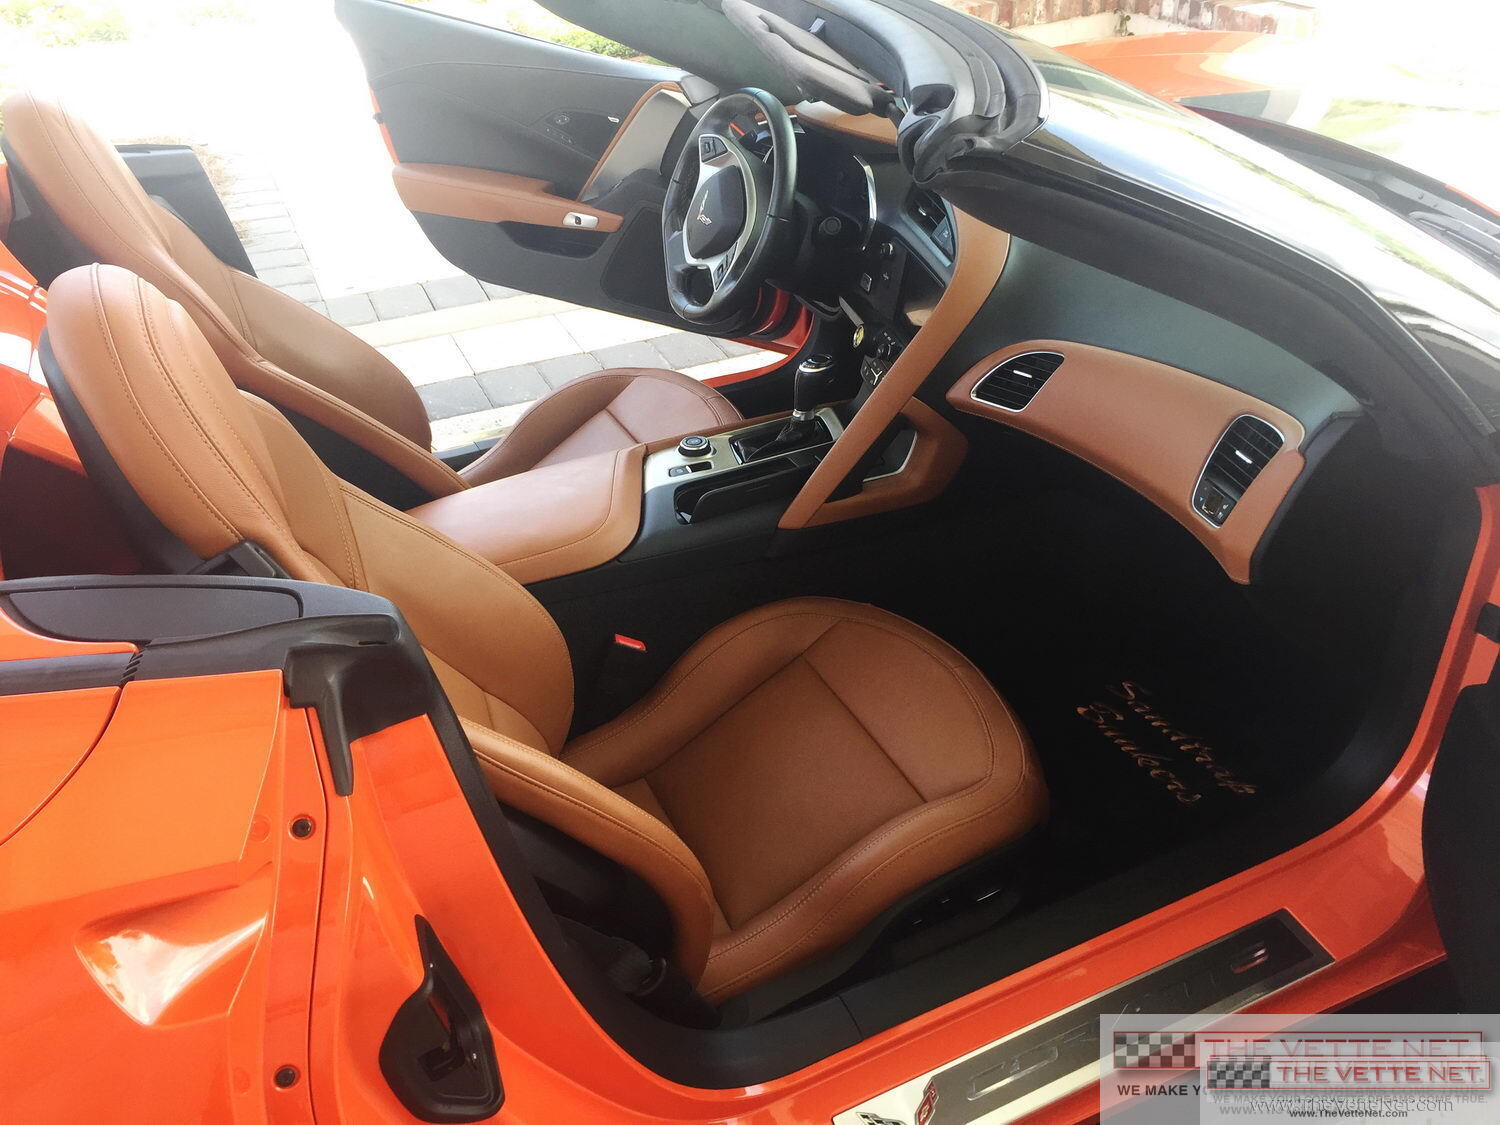 2019 Corvette Convertible Sebring Orange